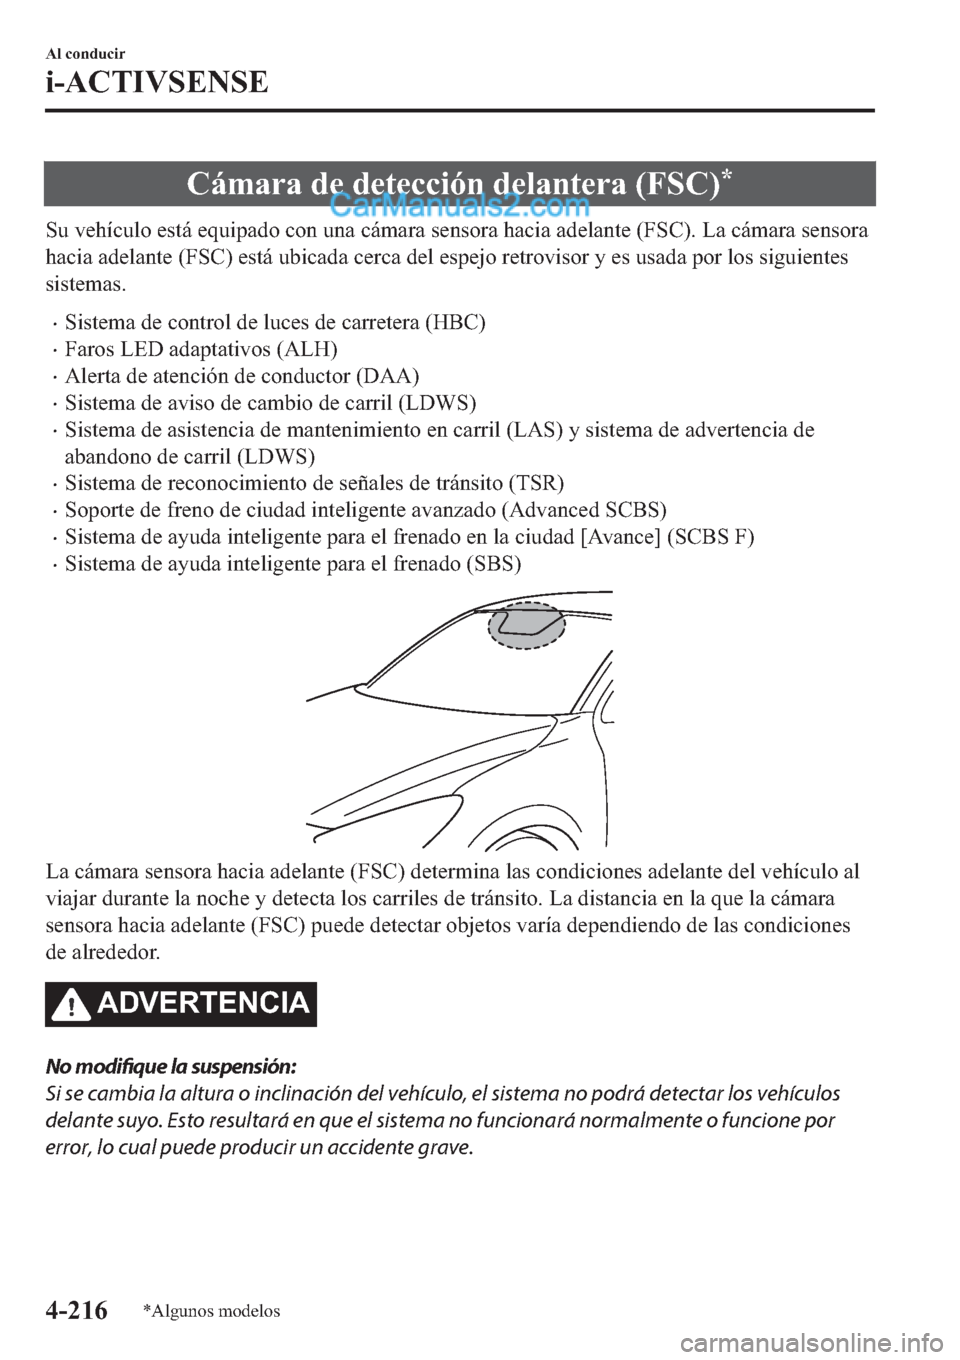 MAZDA MODEL 2 2019  Manual del propietario (in Spanish) �&�i�P�D�U�D��G�H��G�H�W�H�F�F�L�y�Q��G�H�O�D�Q�W�H�U�D���)�6�&��
�6�X��Y�H�K�t�F�X�O�R��H�V�W�i��H�T�X�L�S�D�G�R��F�R�Q��X�Q�D��F�i�P�D�U�D��V�H�Q�V�R�U�D��K�D�F�L�D��D�G�H�O�D�Q�W�H�